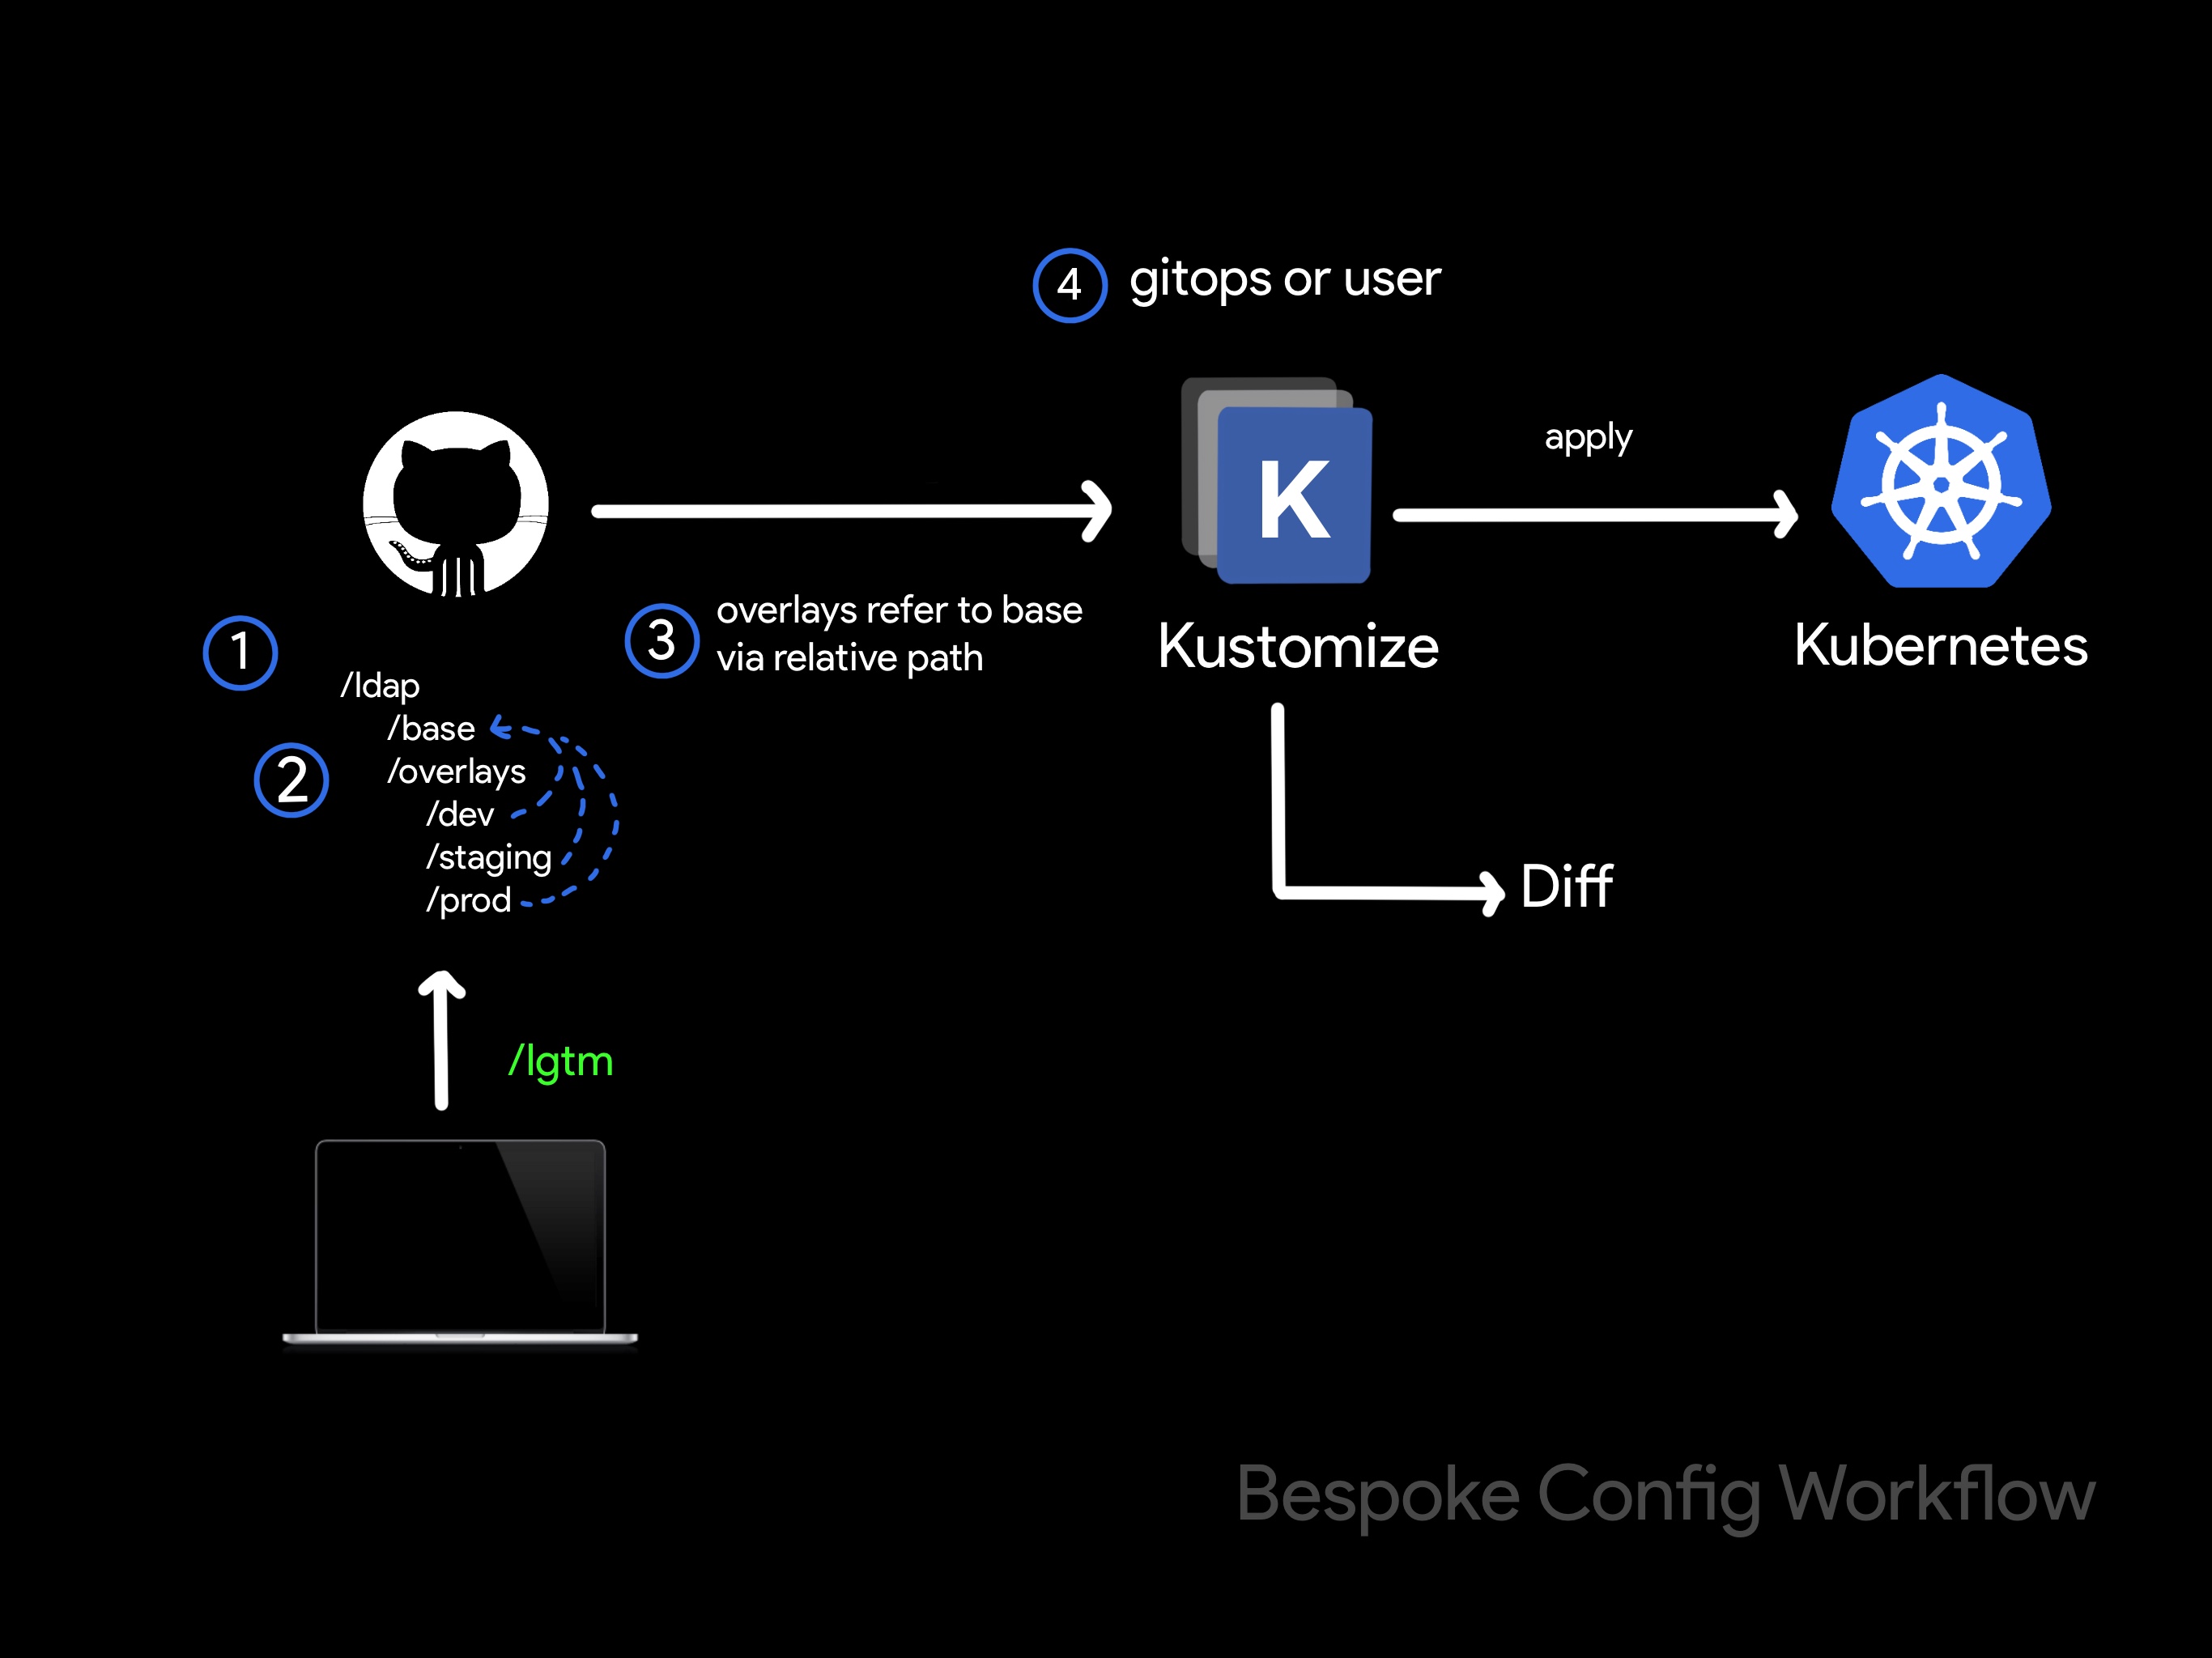 bespoke config workflow image